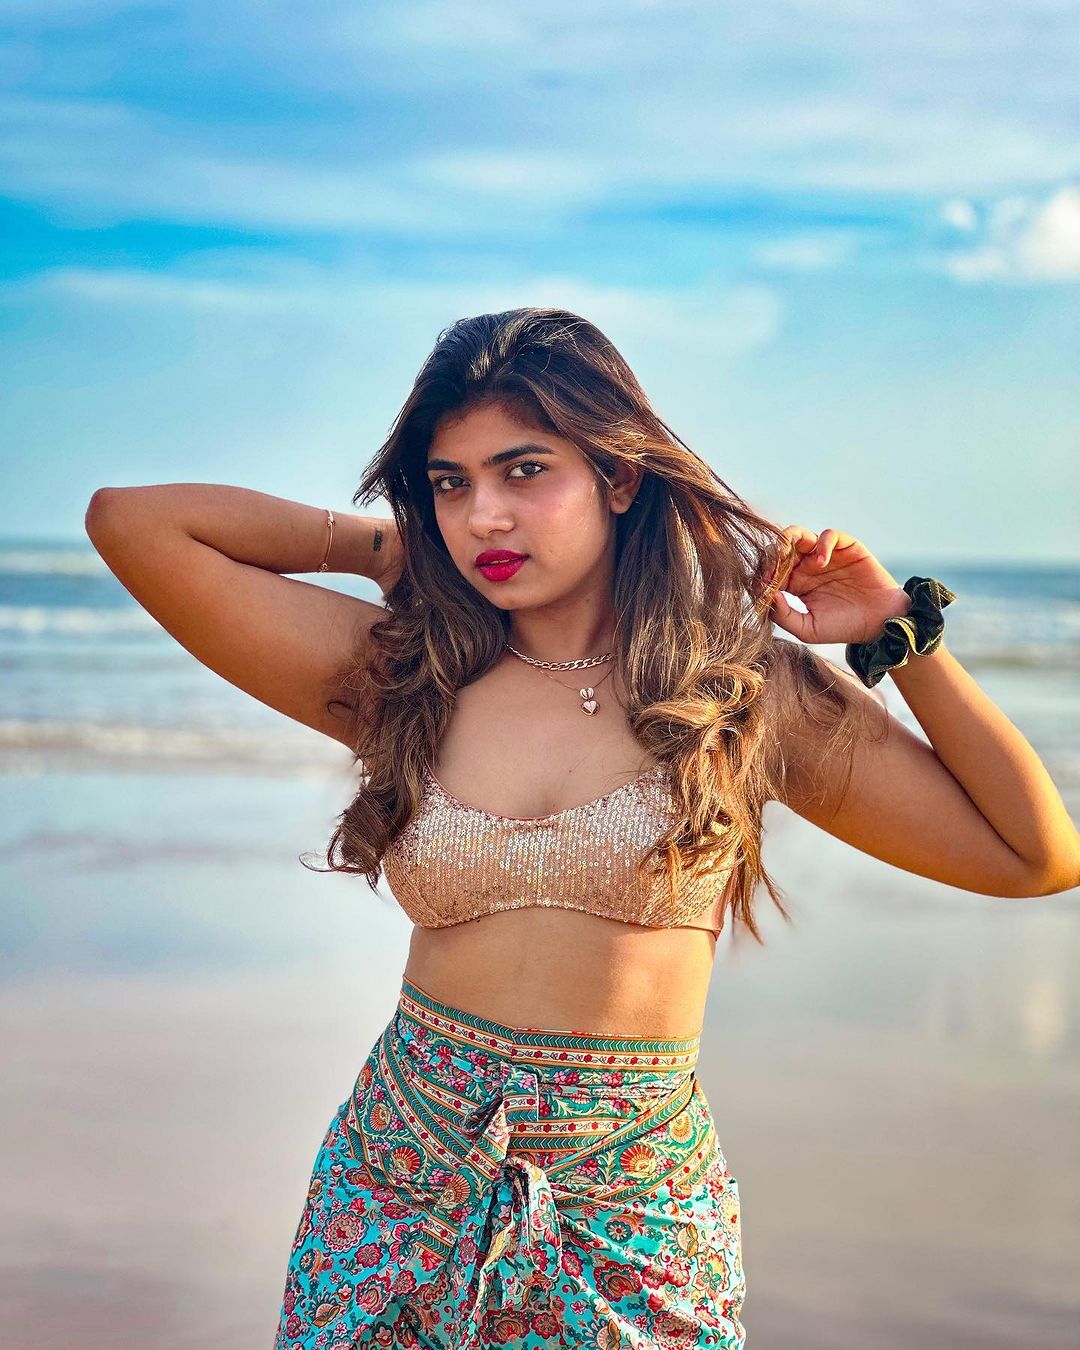 Ritu Chaowdary’s Sensational Photoshoot